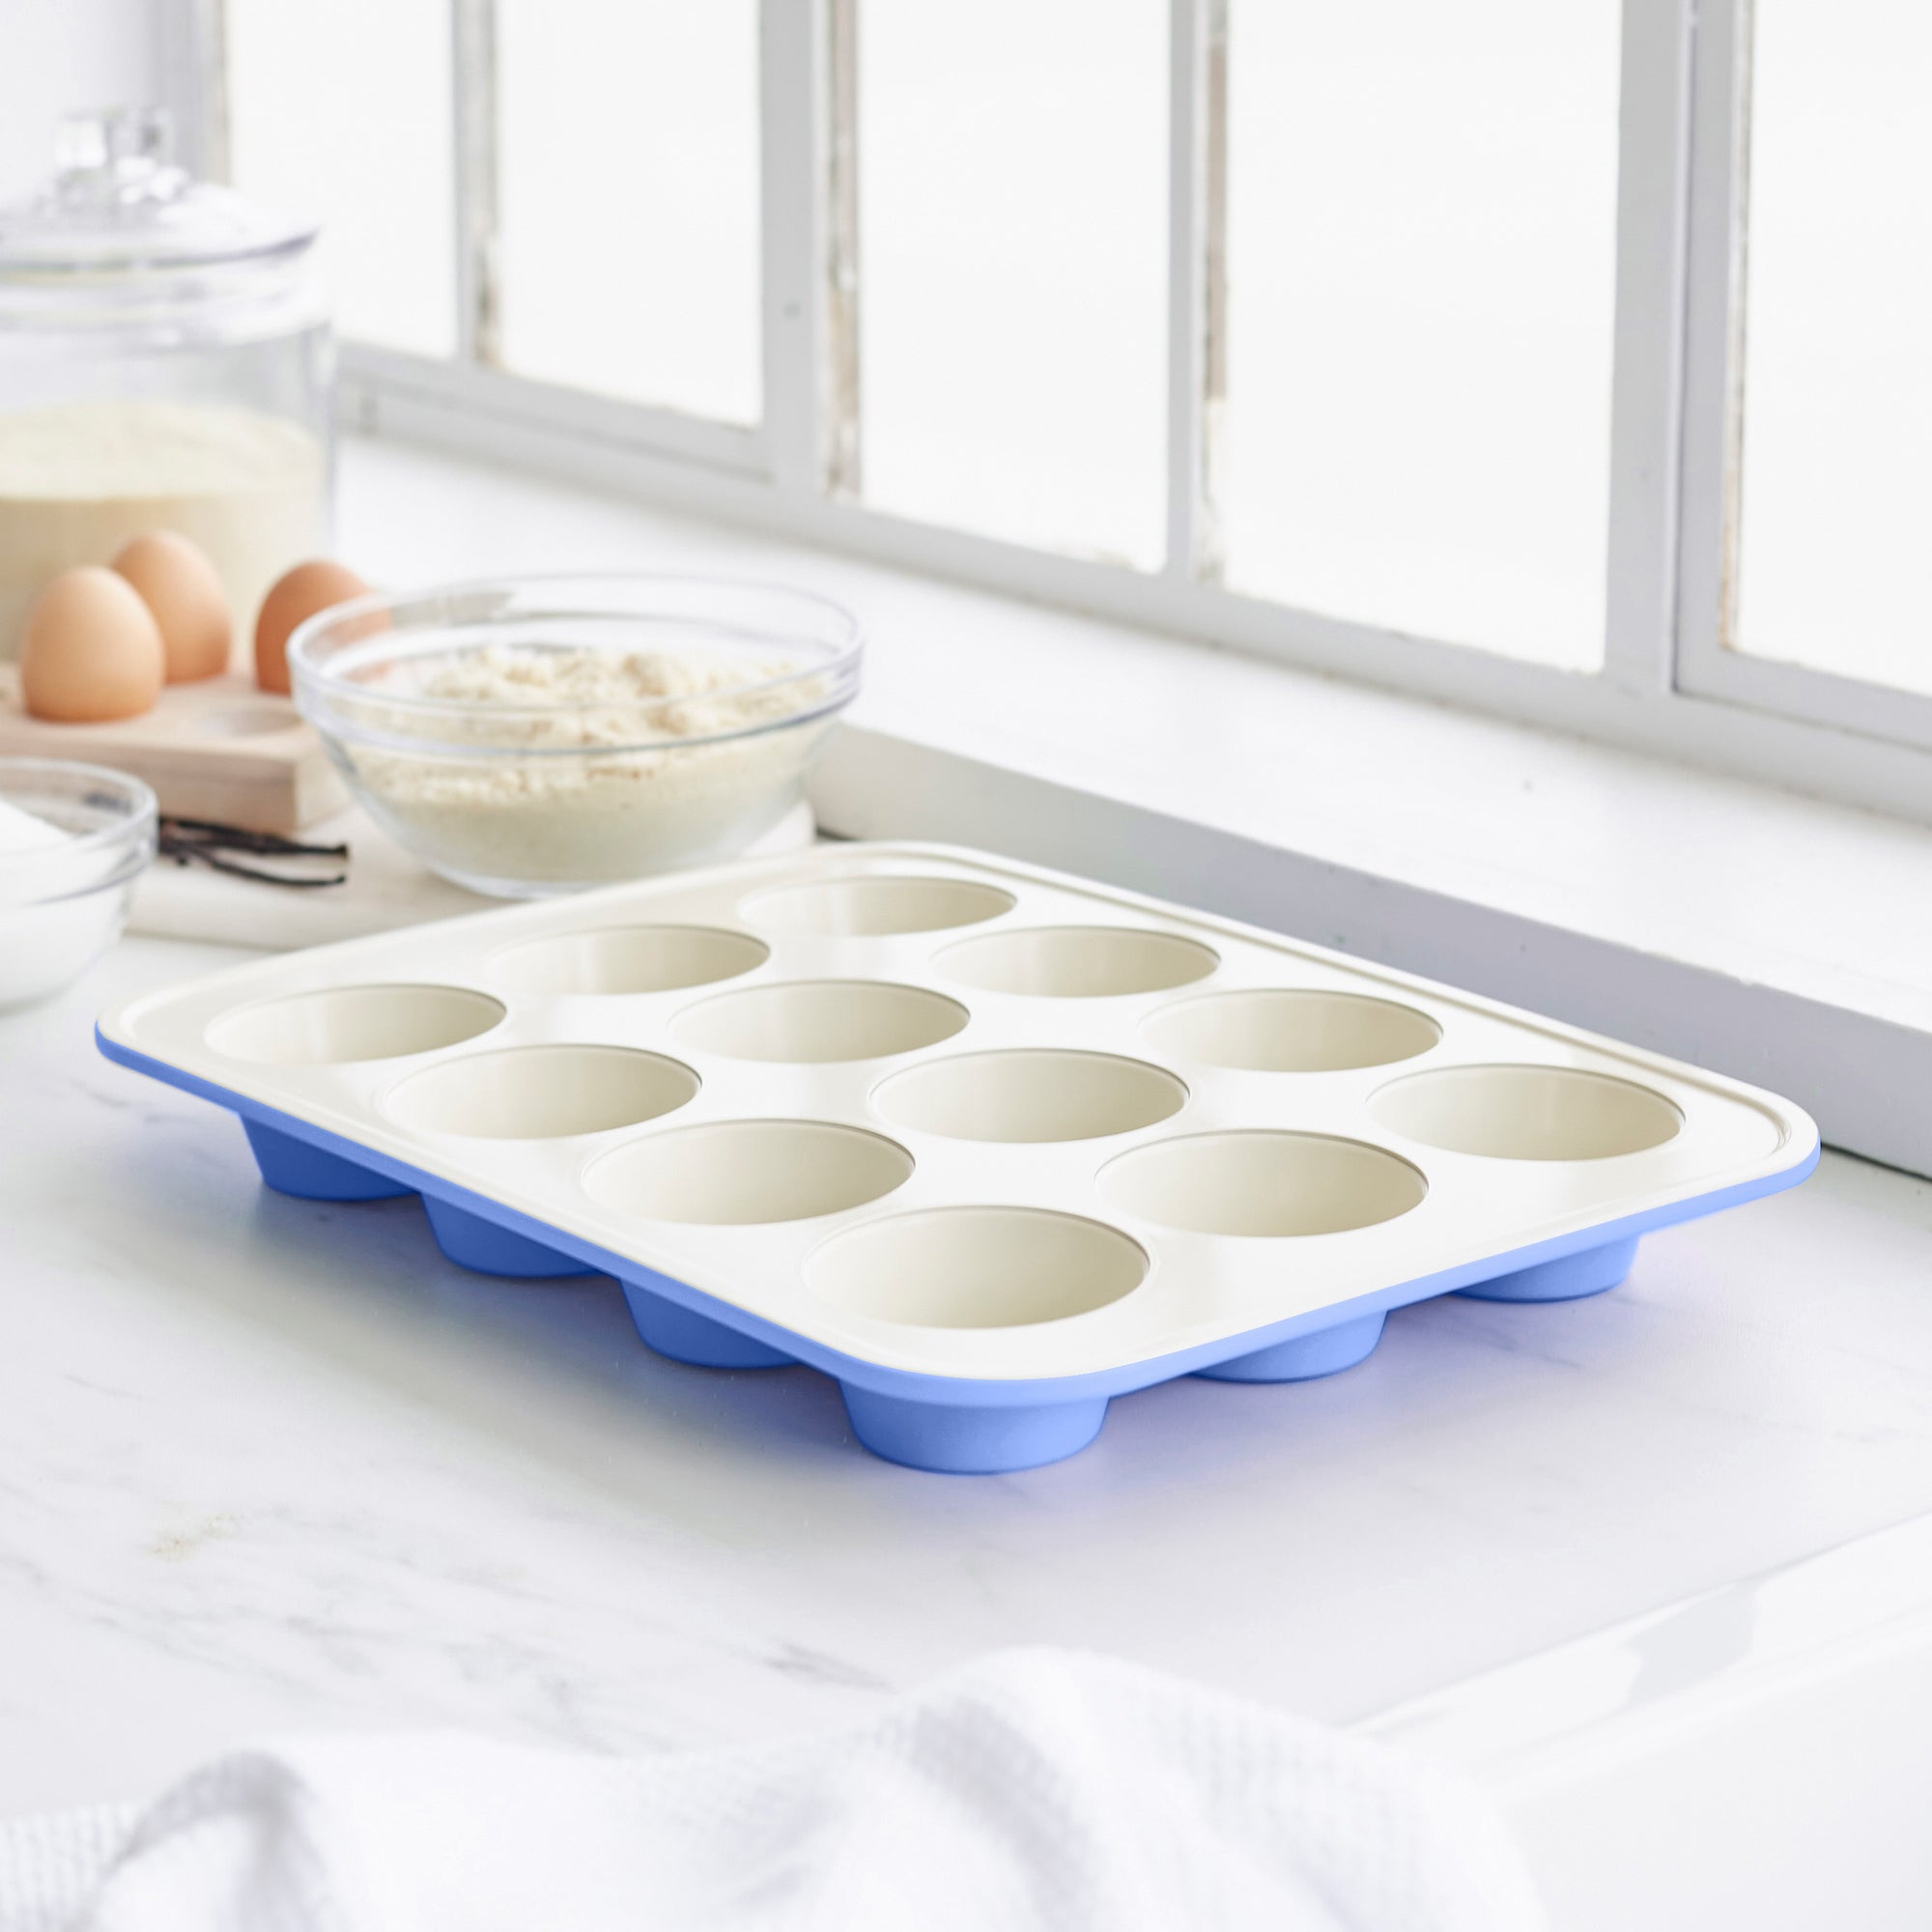 Ceramic 12-Cup Muffin Pan - Naturally Slick Ceramic Coating - Non